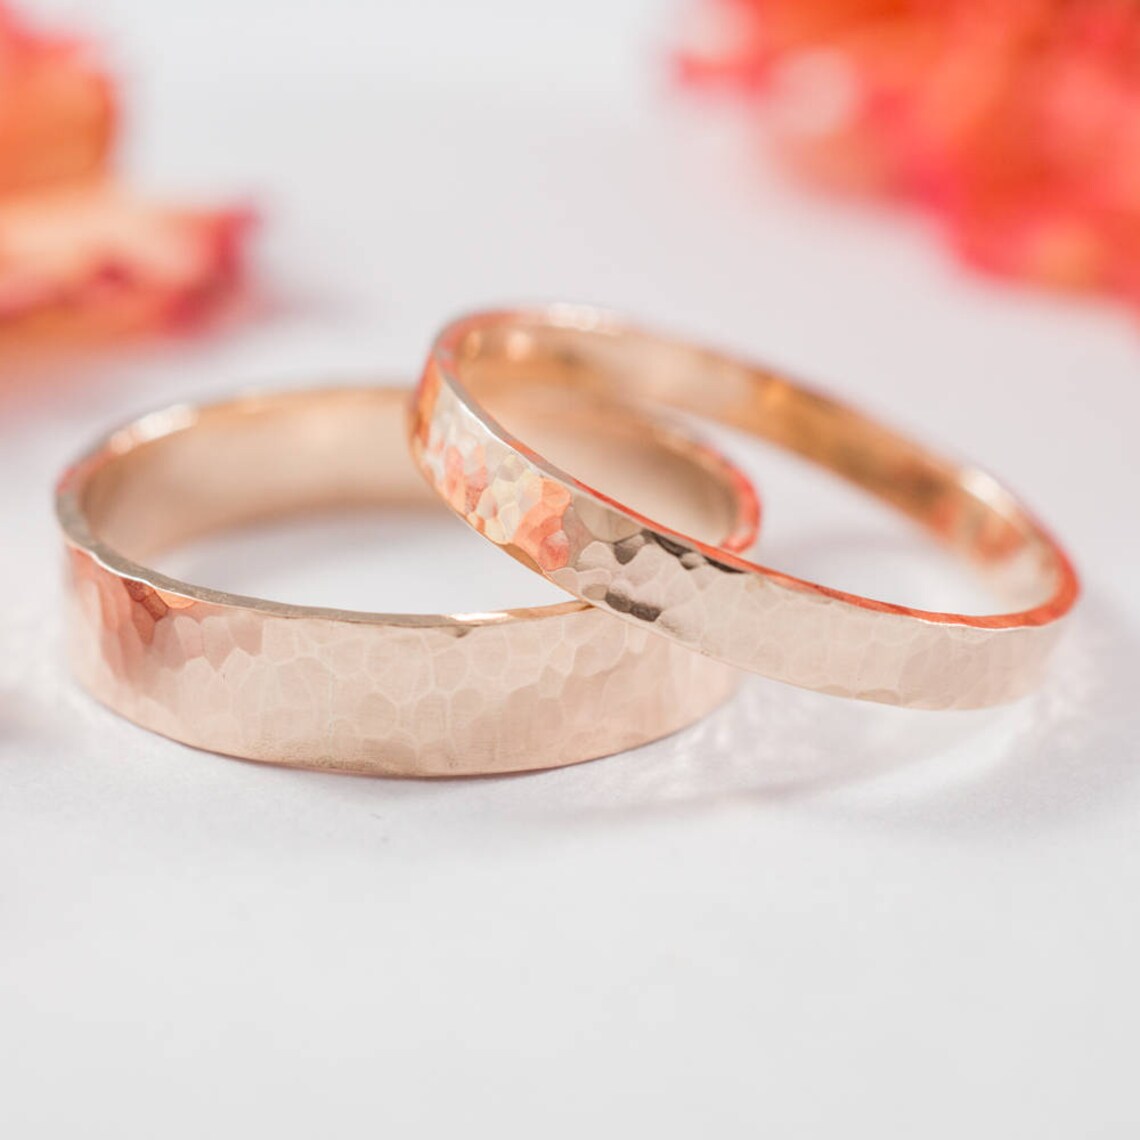 rose gold wedding rings, handmade in wales